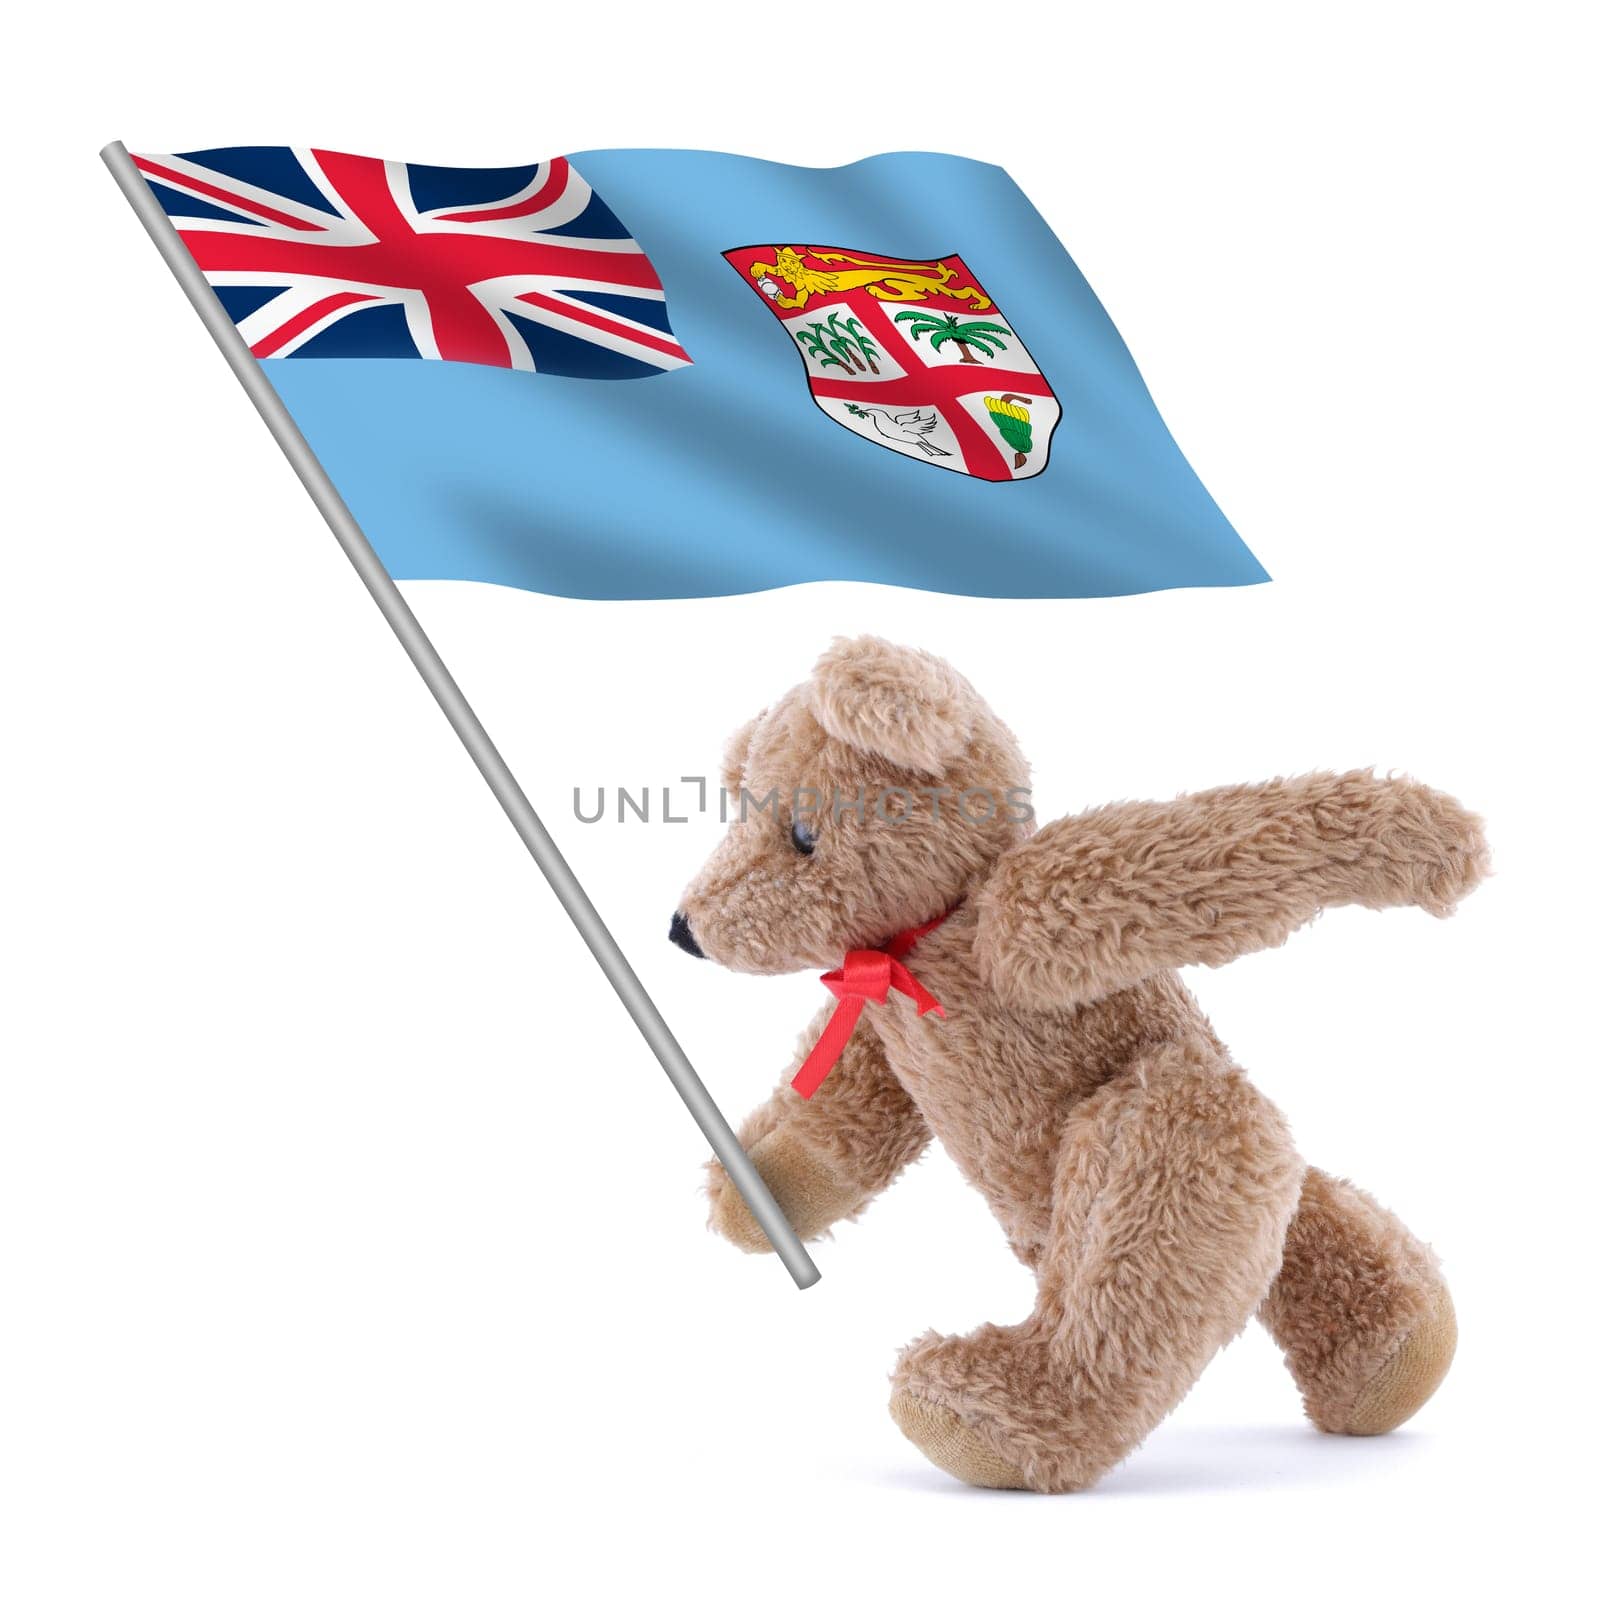 A Fiji Islands flag being carried by a cute teddy bear